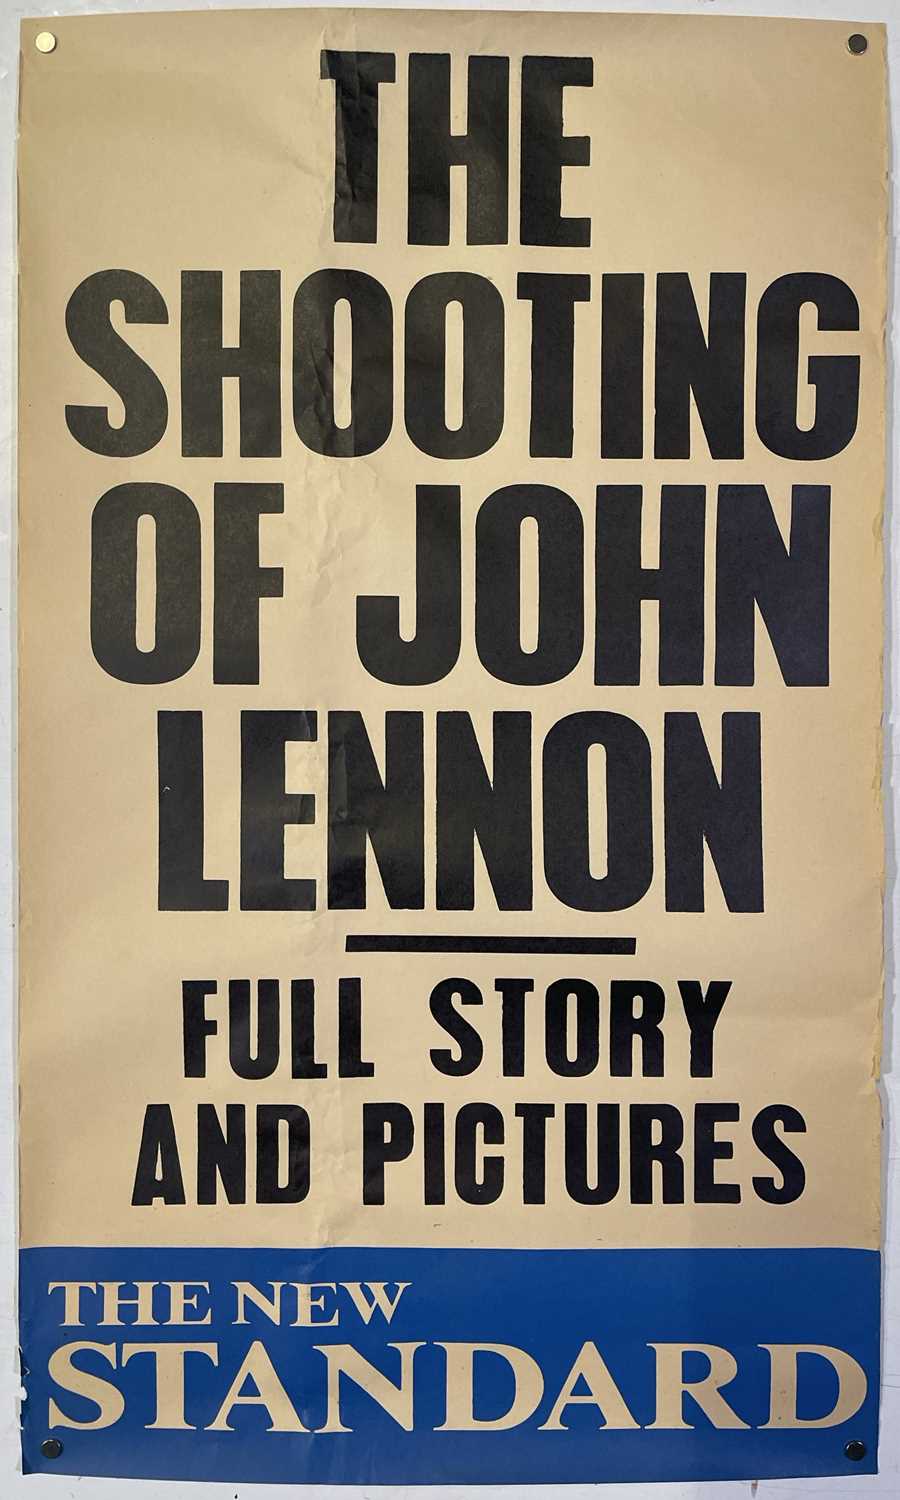 THE BEATLES - JOHN LENNON DEATH NEWSPAPER BILLBOARD.